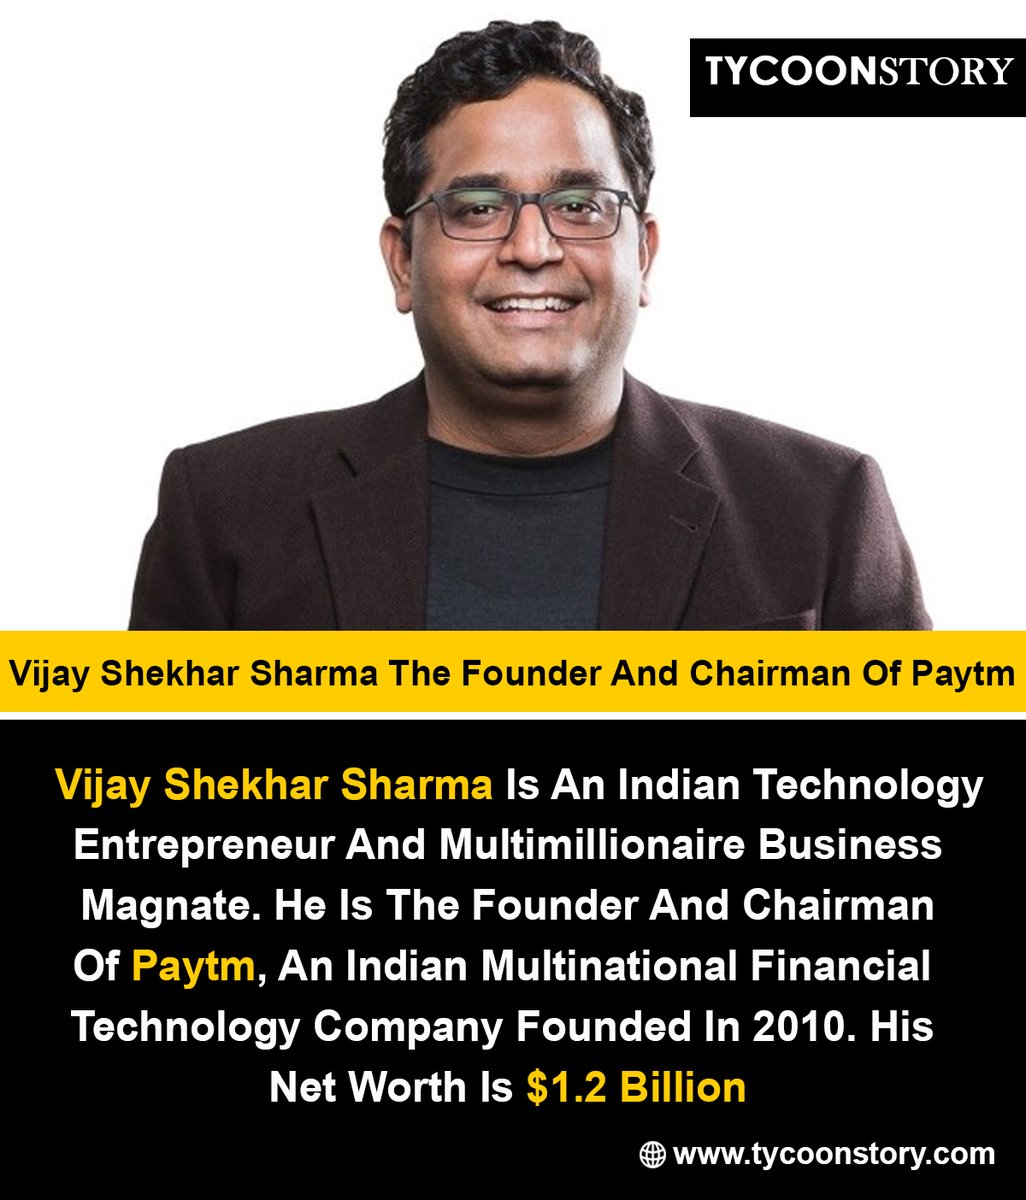 Vijay Shekhar Sharma The Founder And Chairman Of Paytm

#VijayShekharSharma #Paytm #Entrepreneur #StartupSuccess #Fintech #DigitalPayments #Innovation #Leadership #TechEntrepreneur
#StartupIndia #DigitalIndia @Paytm  

tycoonstory.com